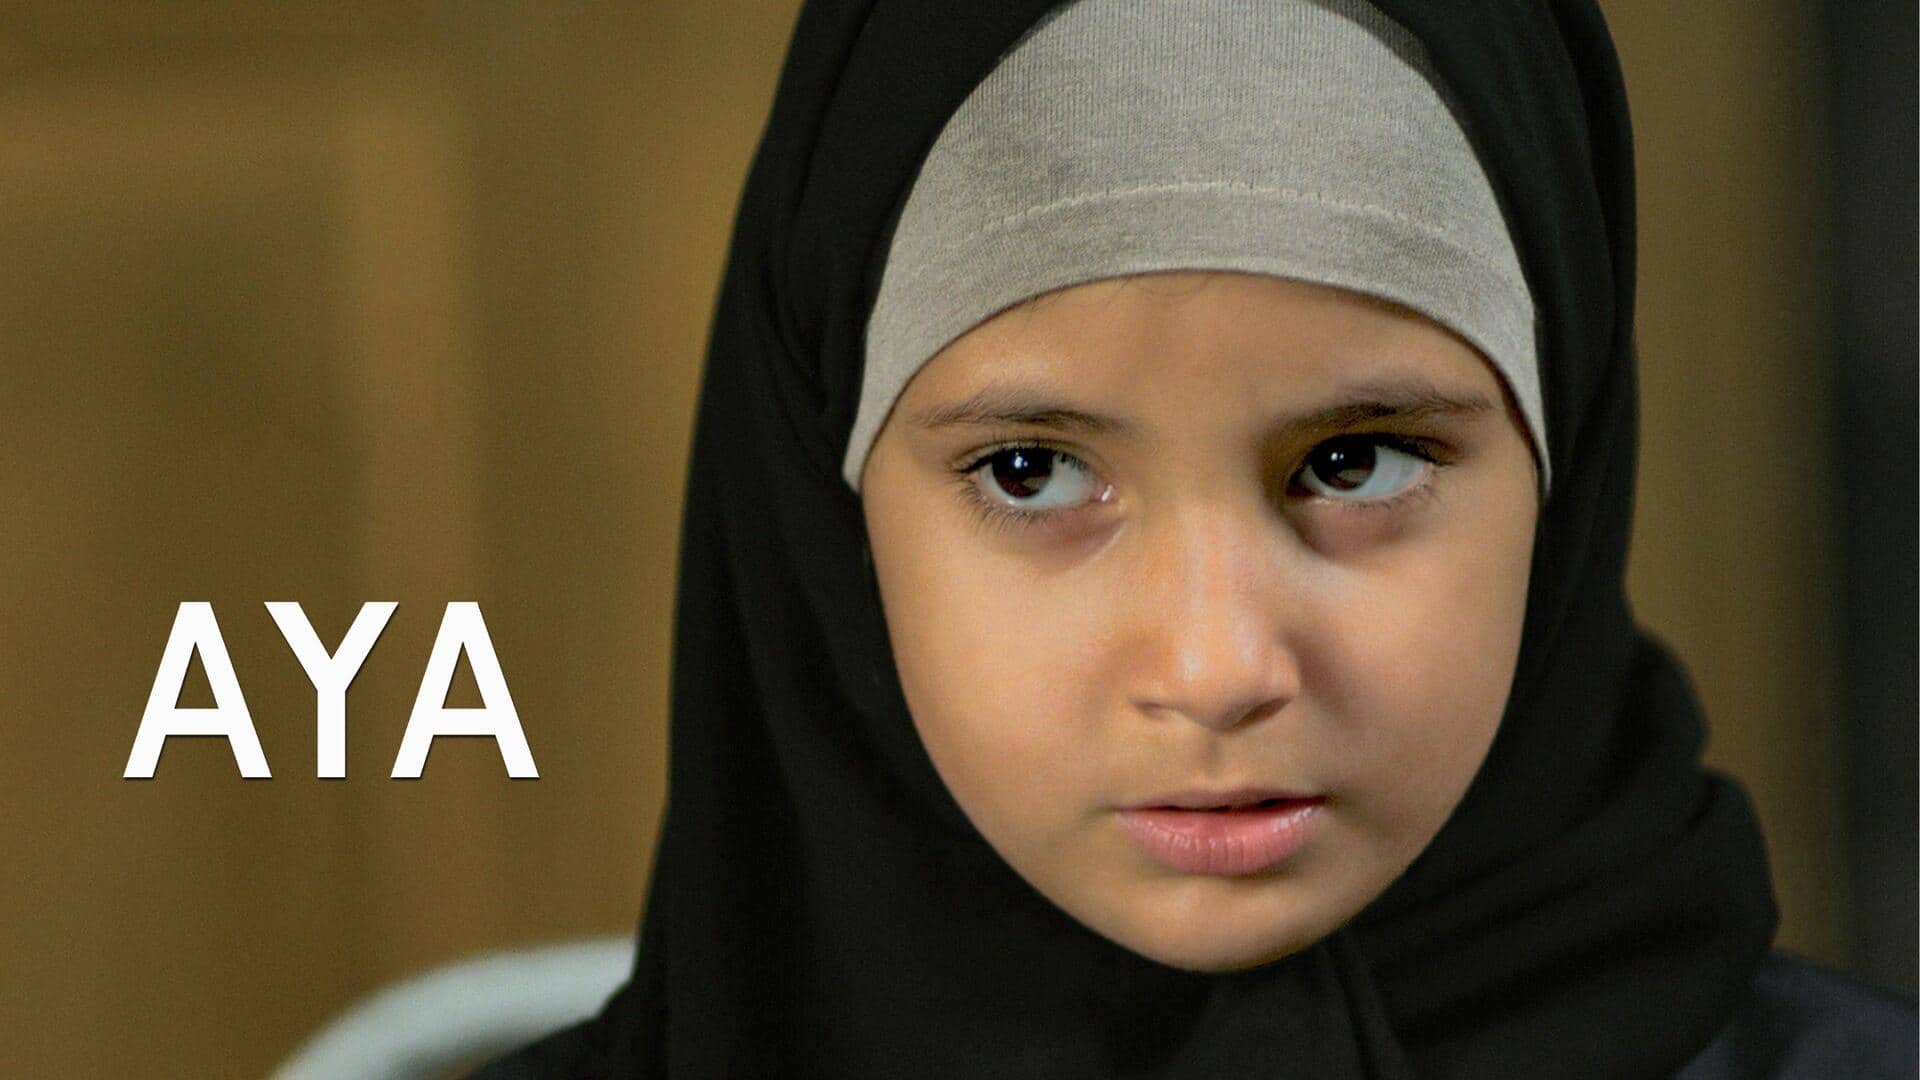 #NewsBytesRecommends: 'Aya' on Netflix explores girls' dreams, desires, uncertain futures